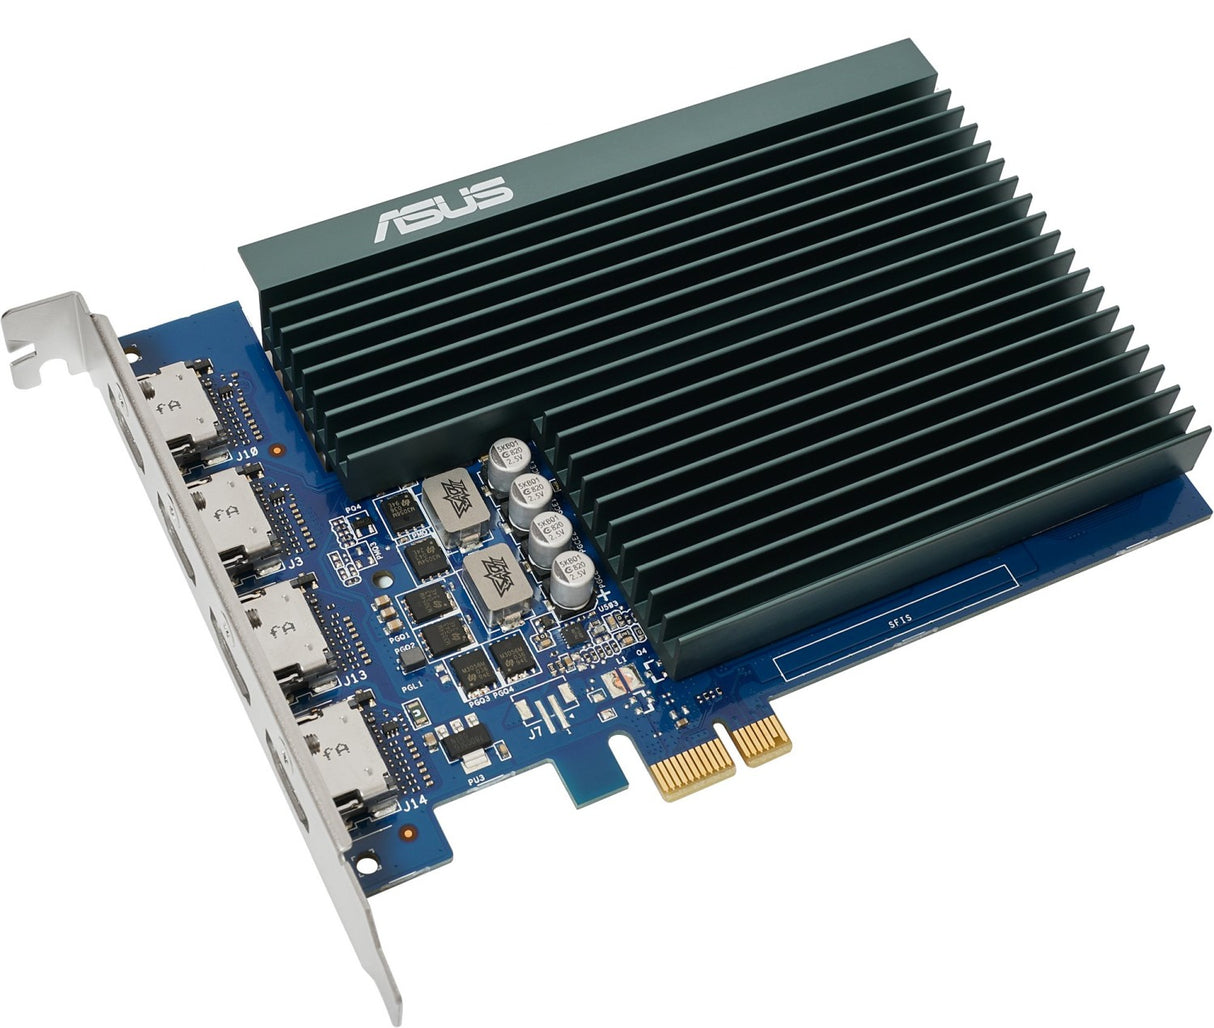 Grafična kartica ASUS GeForce GT 730 HDMIx4, 2GB GDDR5, PCI-E 2.0